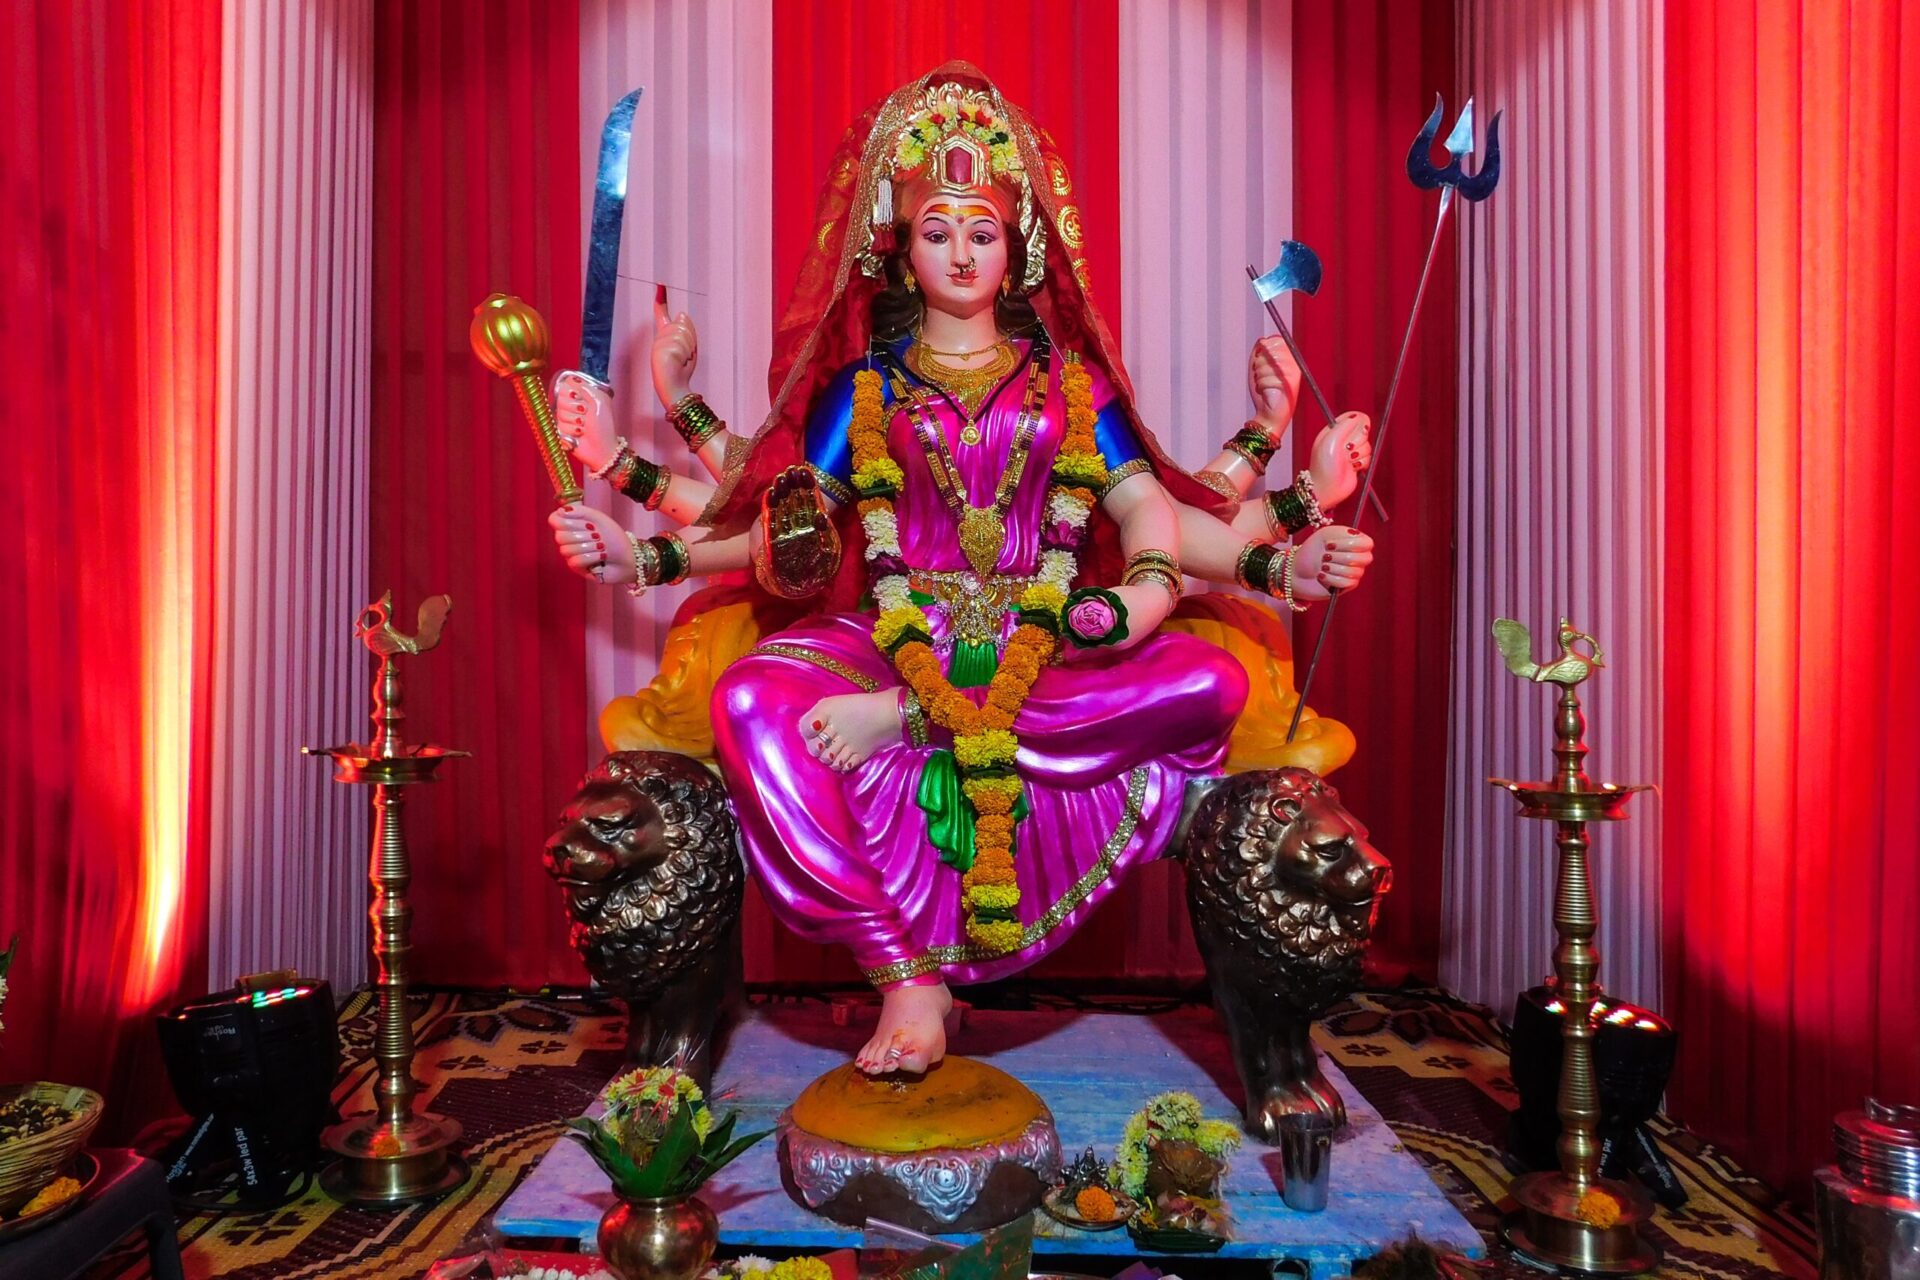 What Are The Qualities And Powers Of The Hindu Trinity - Brahma, Vishnu And Shiva?